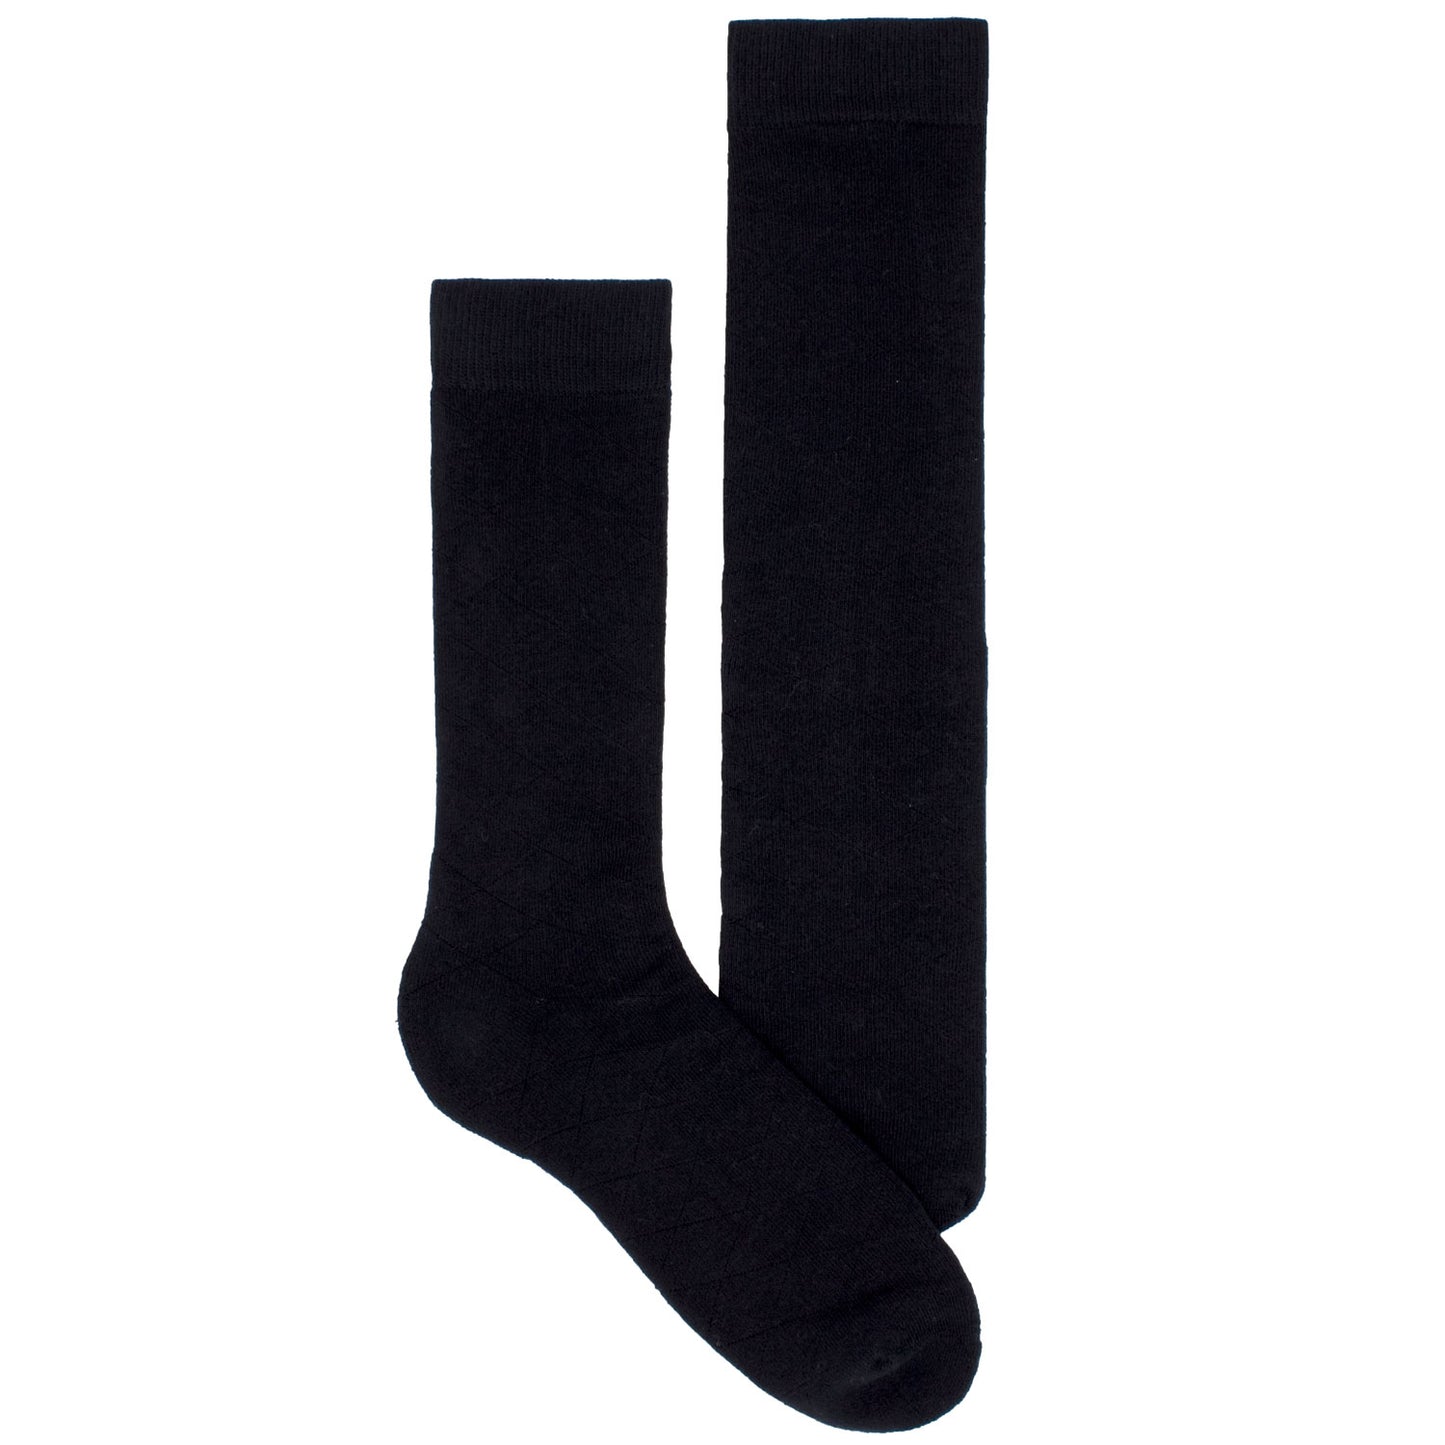 Men's Socks Athletic Sport Performance Durable Geometric Pattern Mid Calf Crew Socks Black